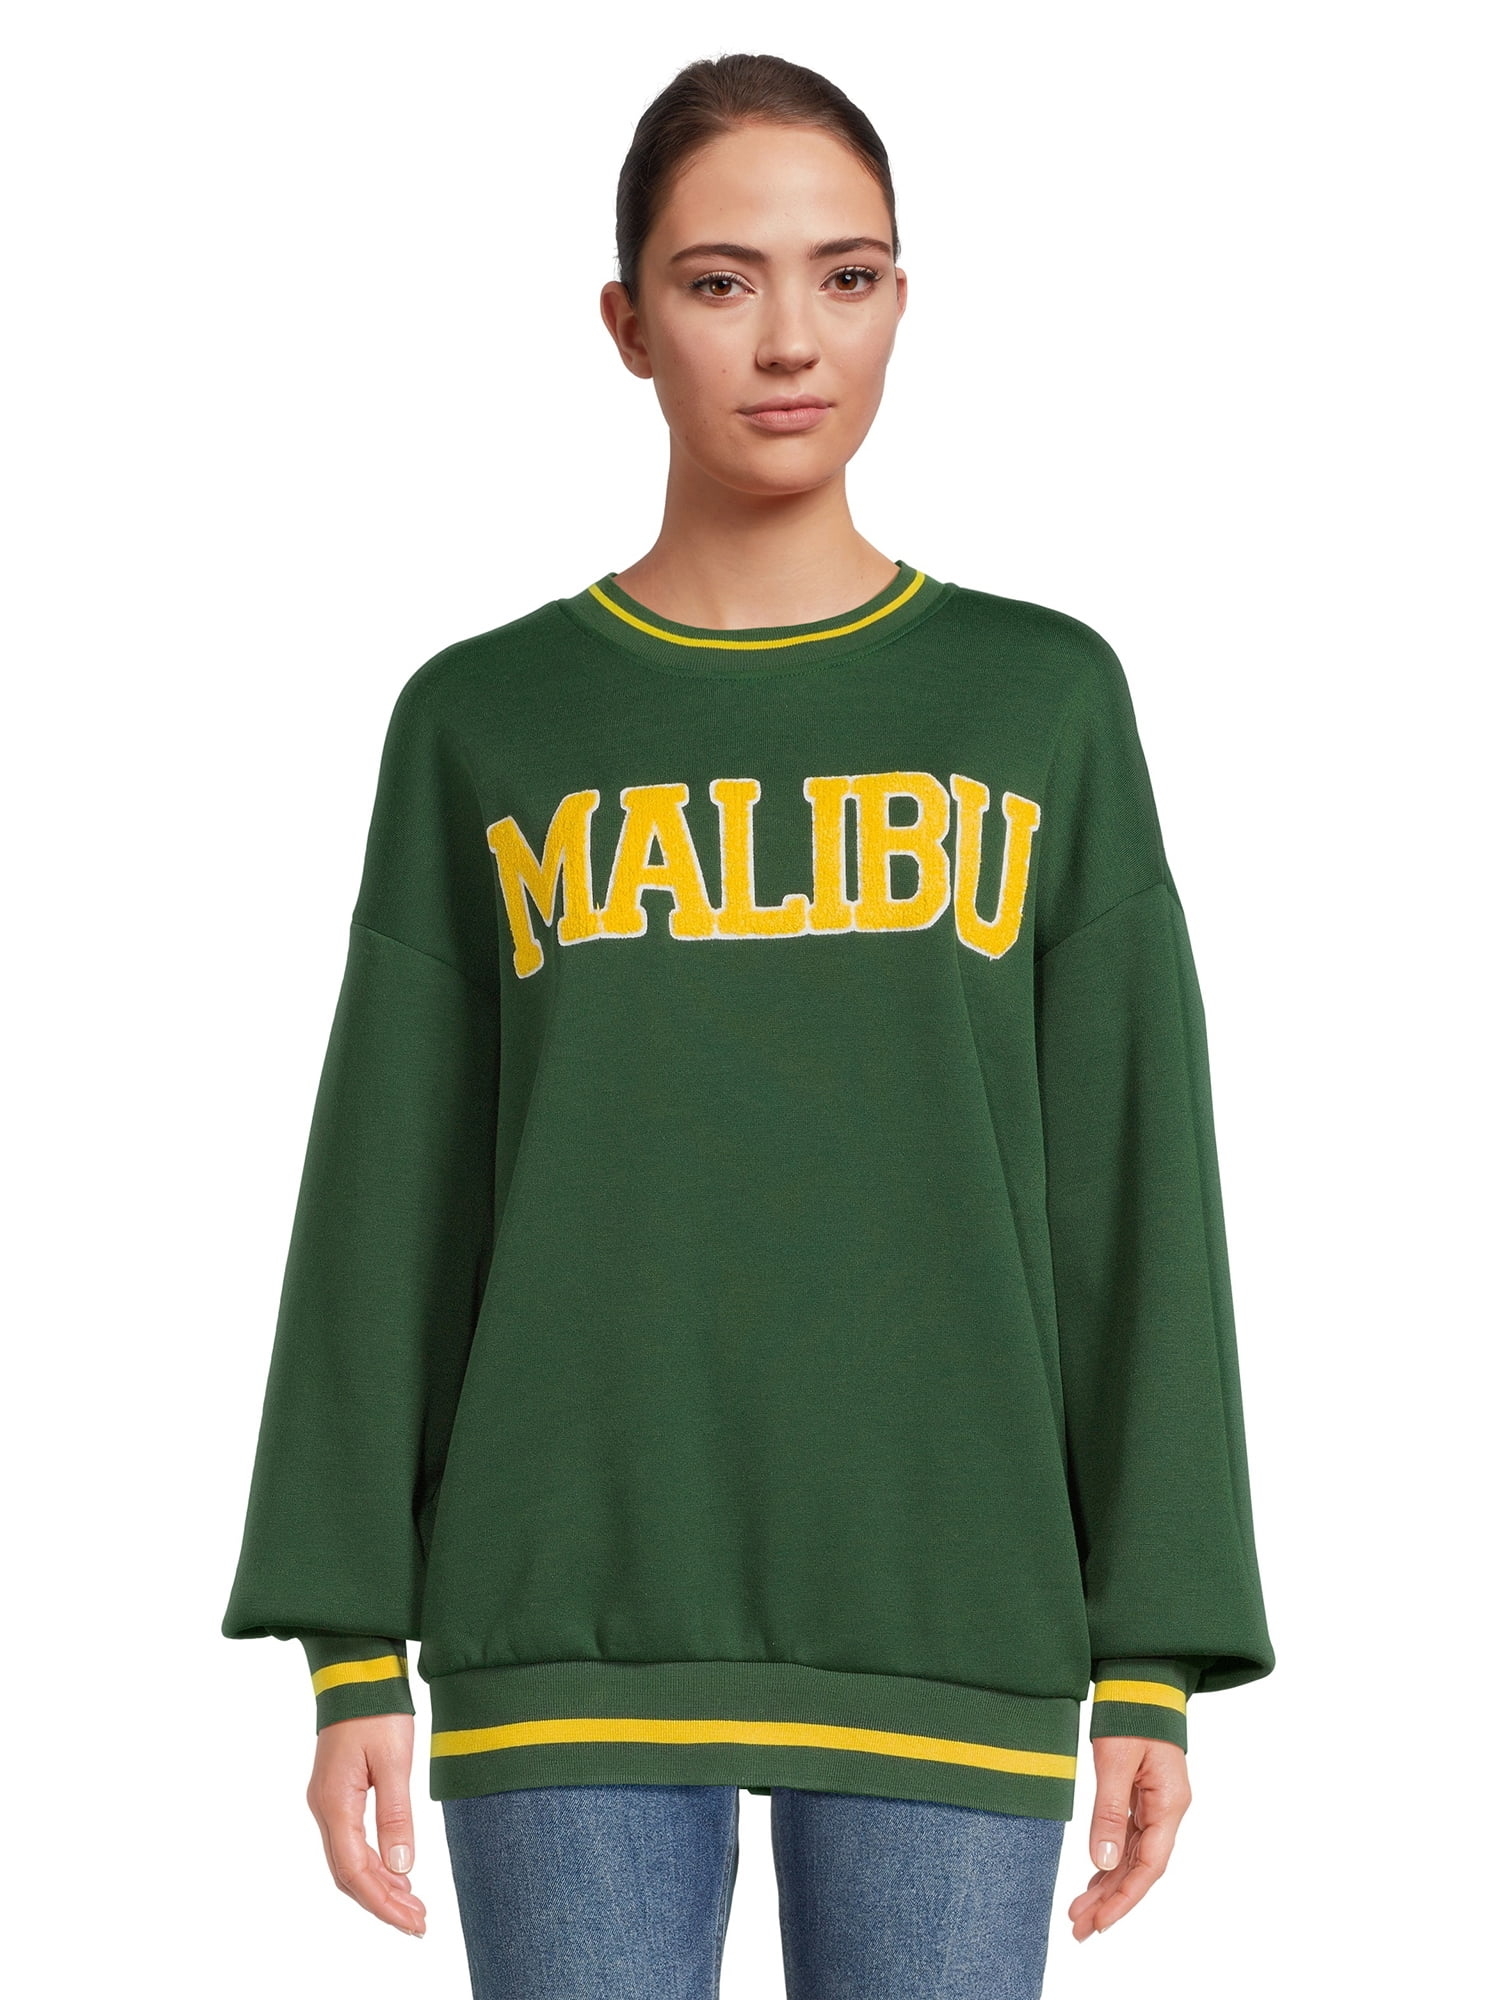 Model wearing the Malibu sweater